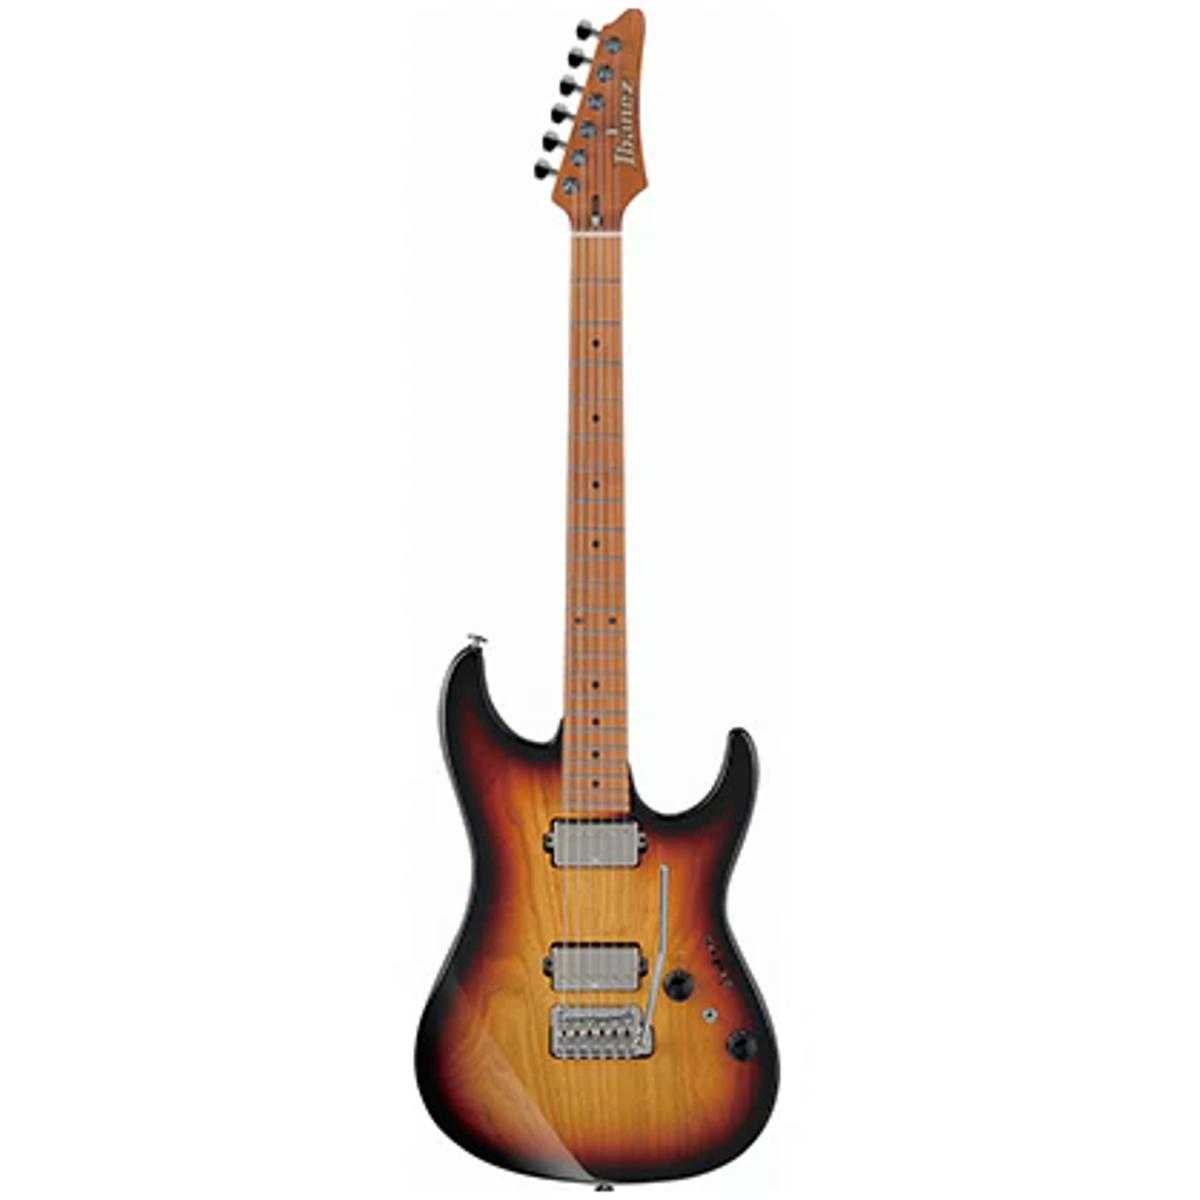 Ibanez AZ2202A-TFB Prestige Electric Guitar Tri Fade Burst w/ Case - MINOR DAMAGE